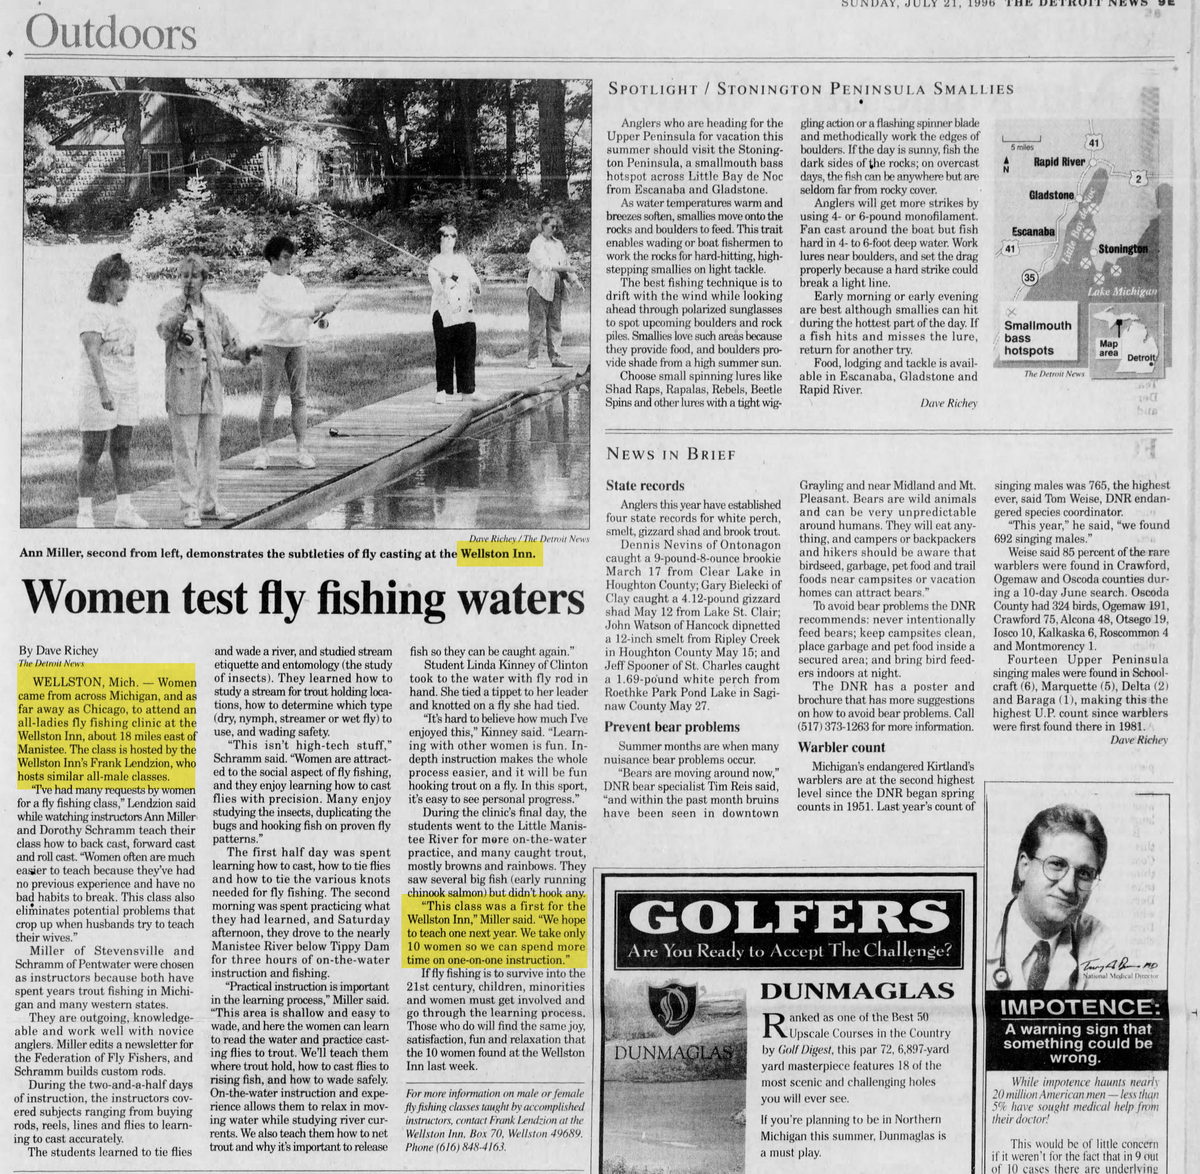 Wellston Inn - Jul 21 1996 Article